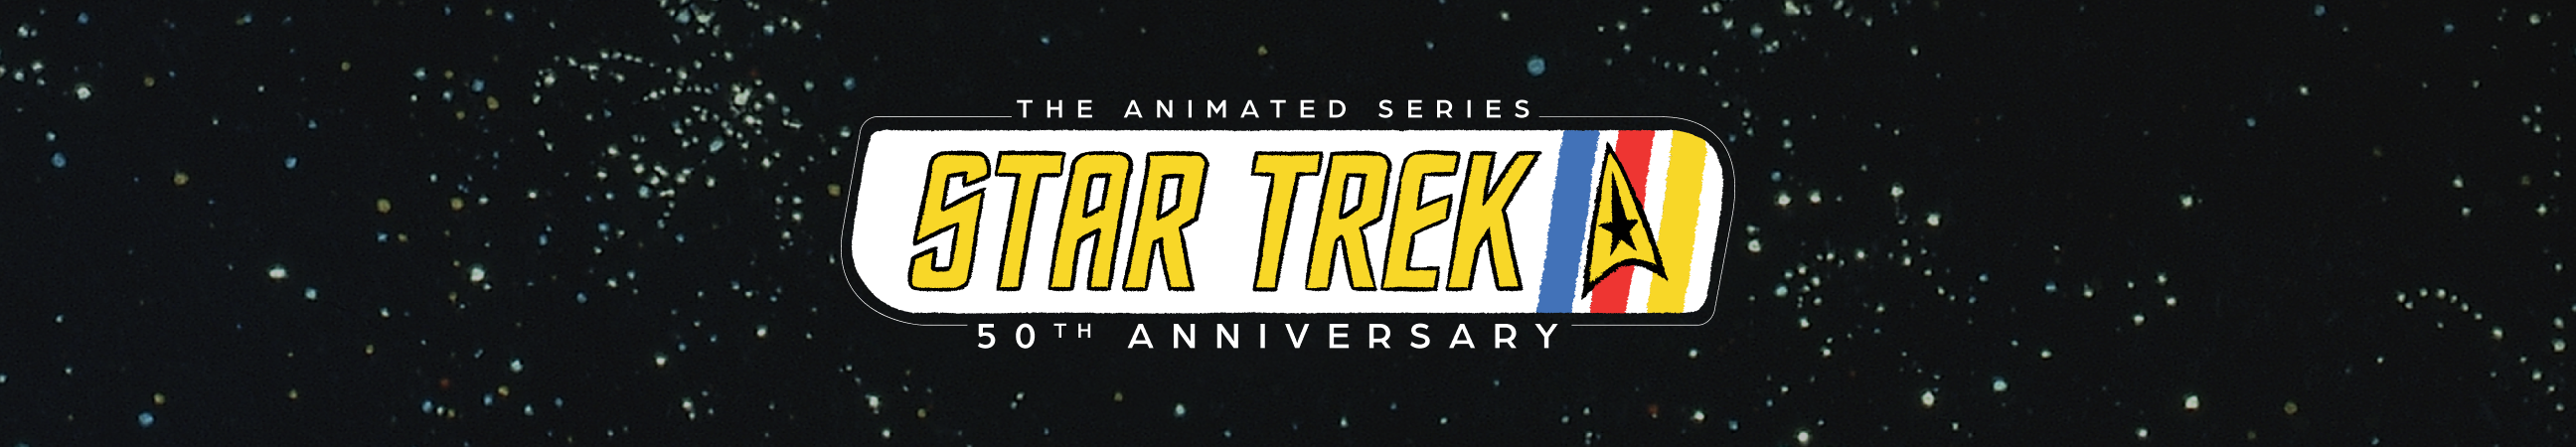 Star Trek: The Animated Series 50th Anniversary